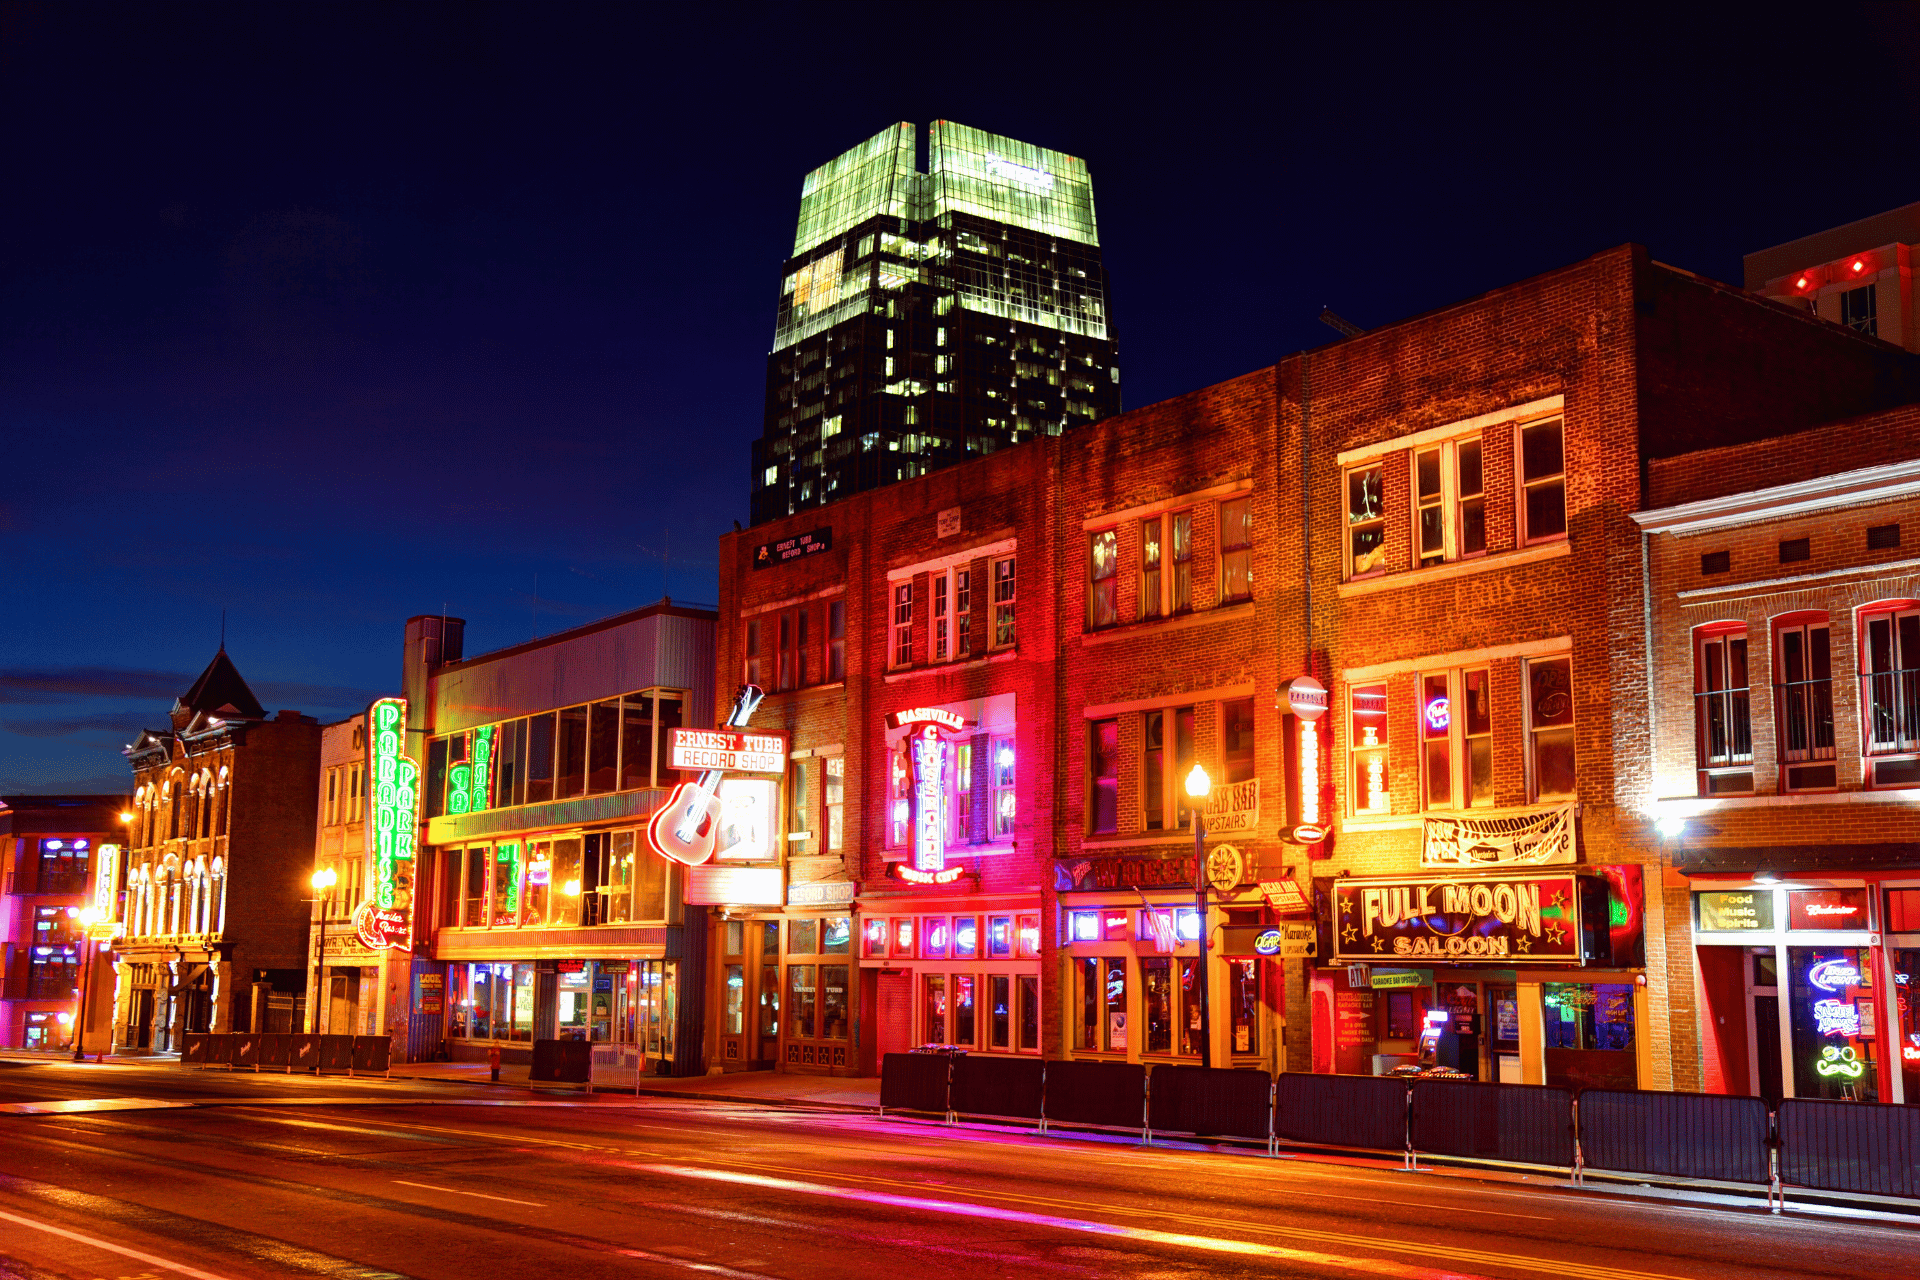 A street in Nashville at night